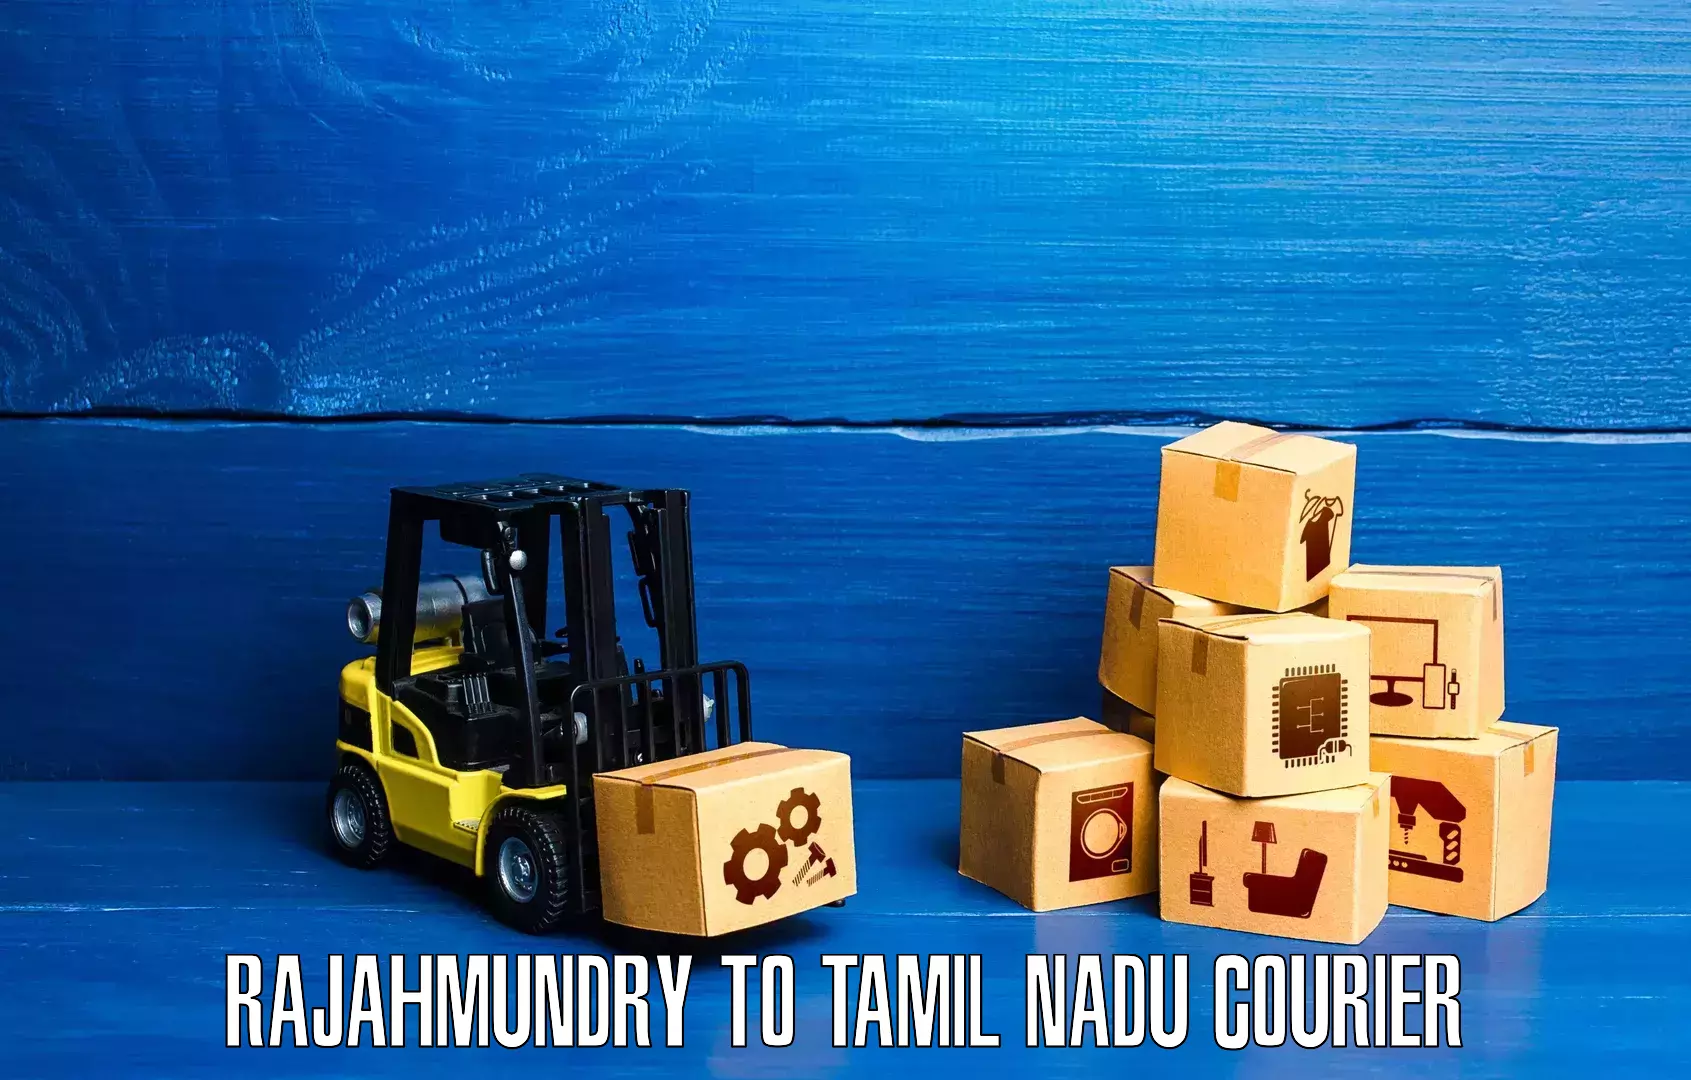 Global shipping networks Rajahmundry to Melakaveri